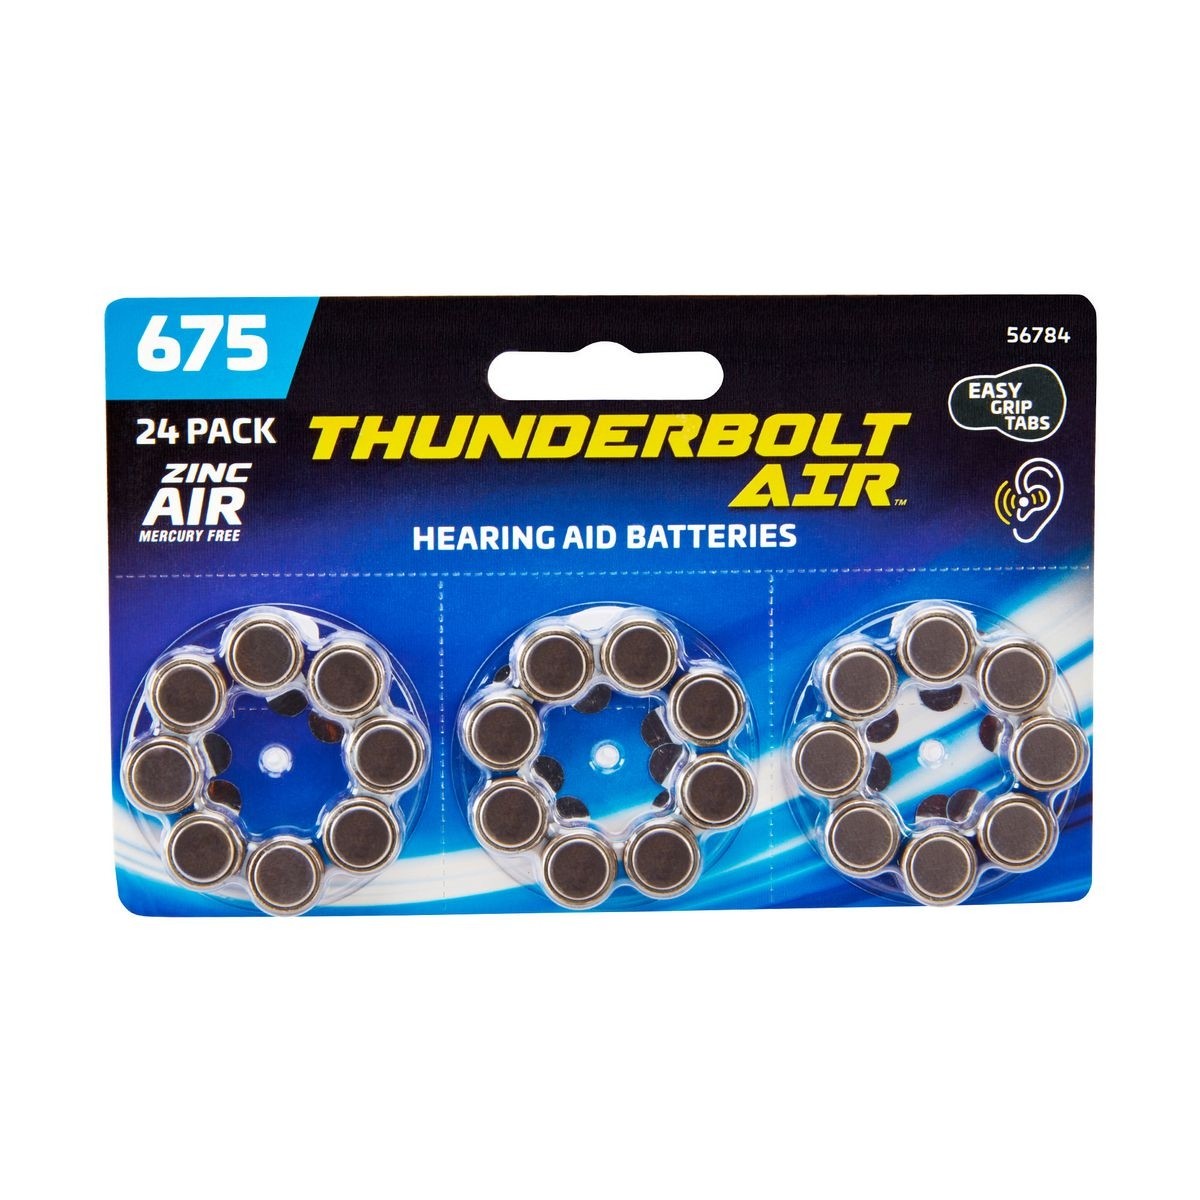 THUNDERBOLT A675 Hearing Aid Batteries - 24 Pk. – Item 56784